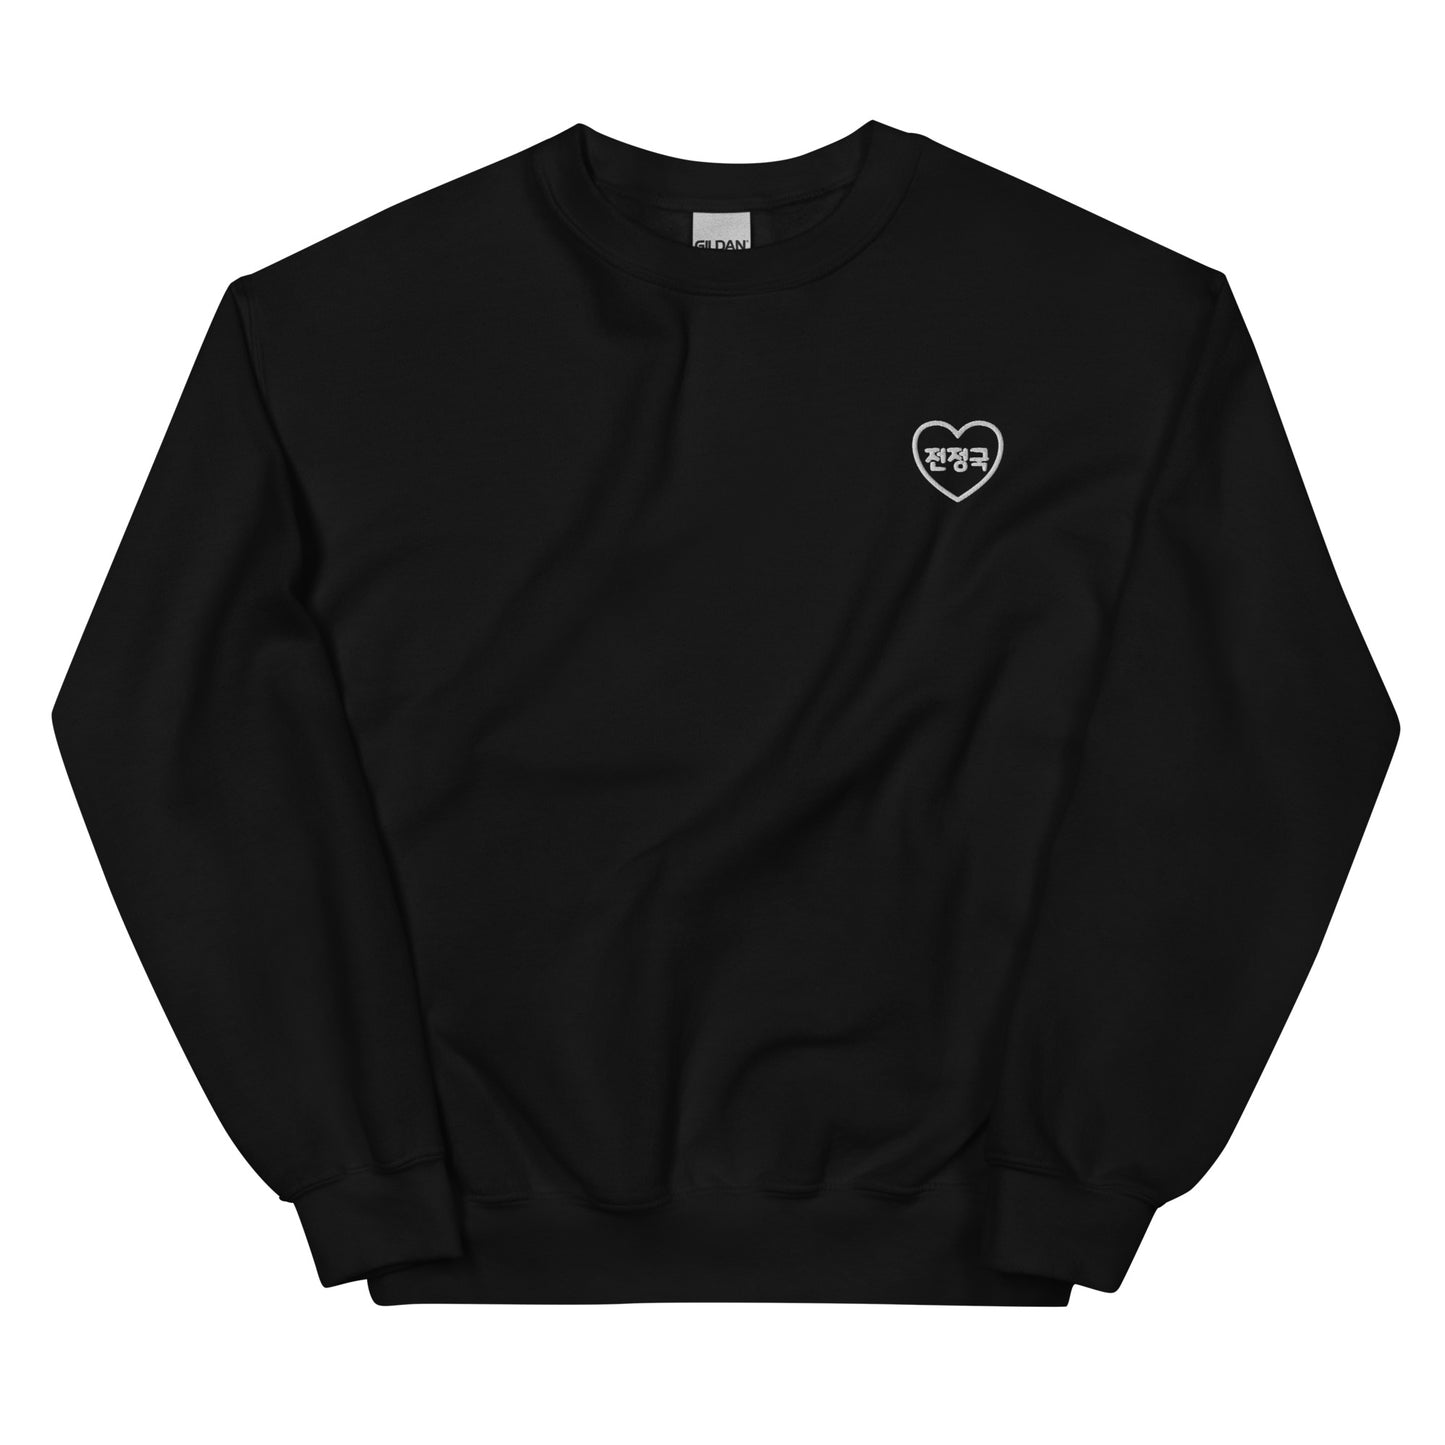 BTS Jungkook, Jeon Jung-kook Korean Name Merch Embroidery Unisex Sweatshirt